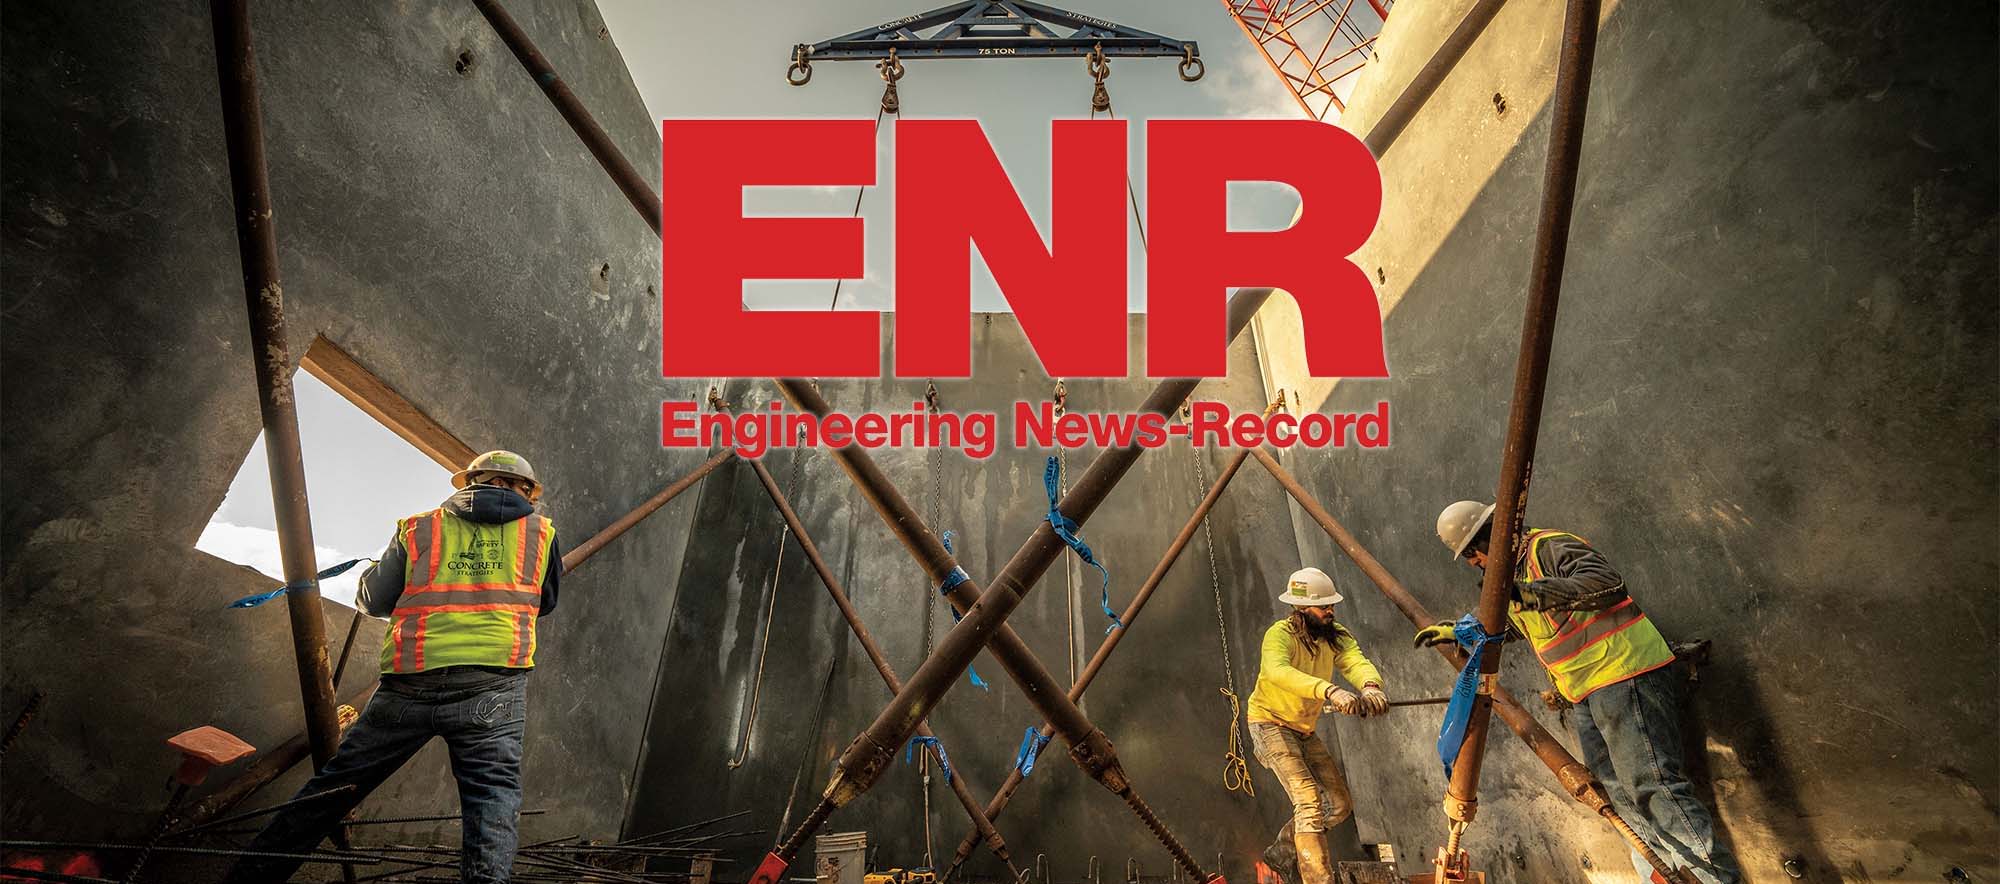 ENR Logo and construction site.